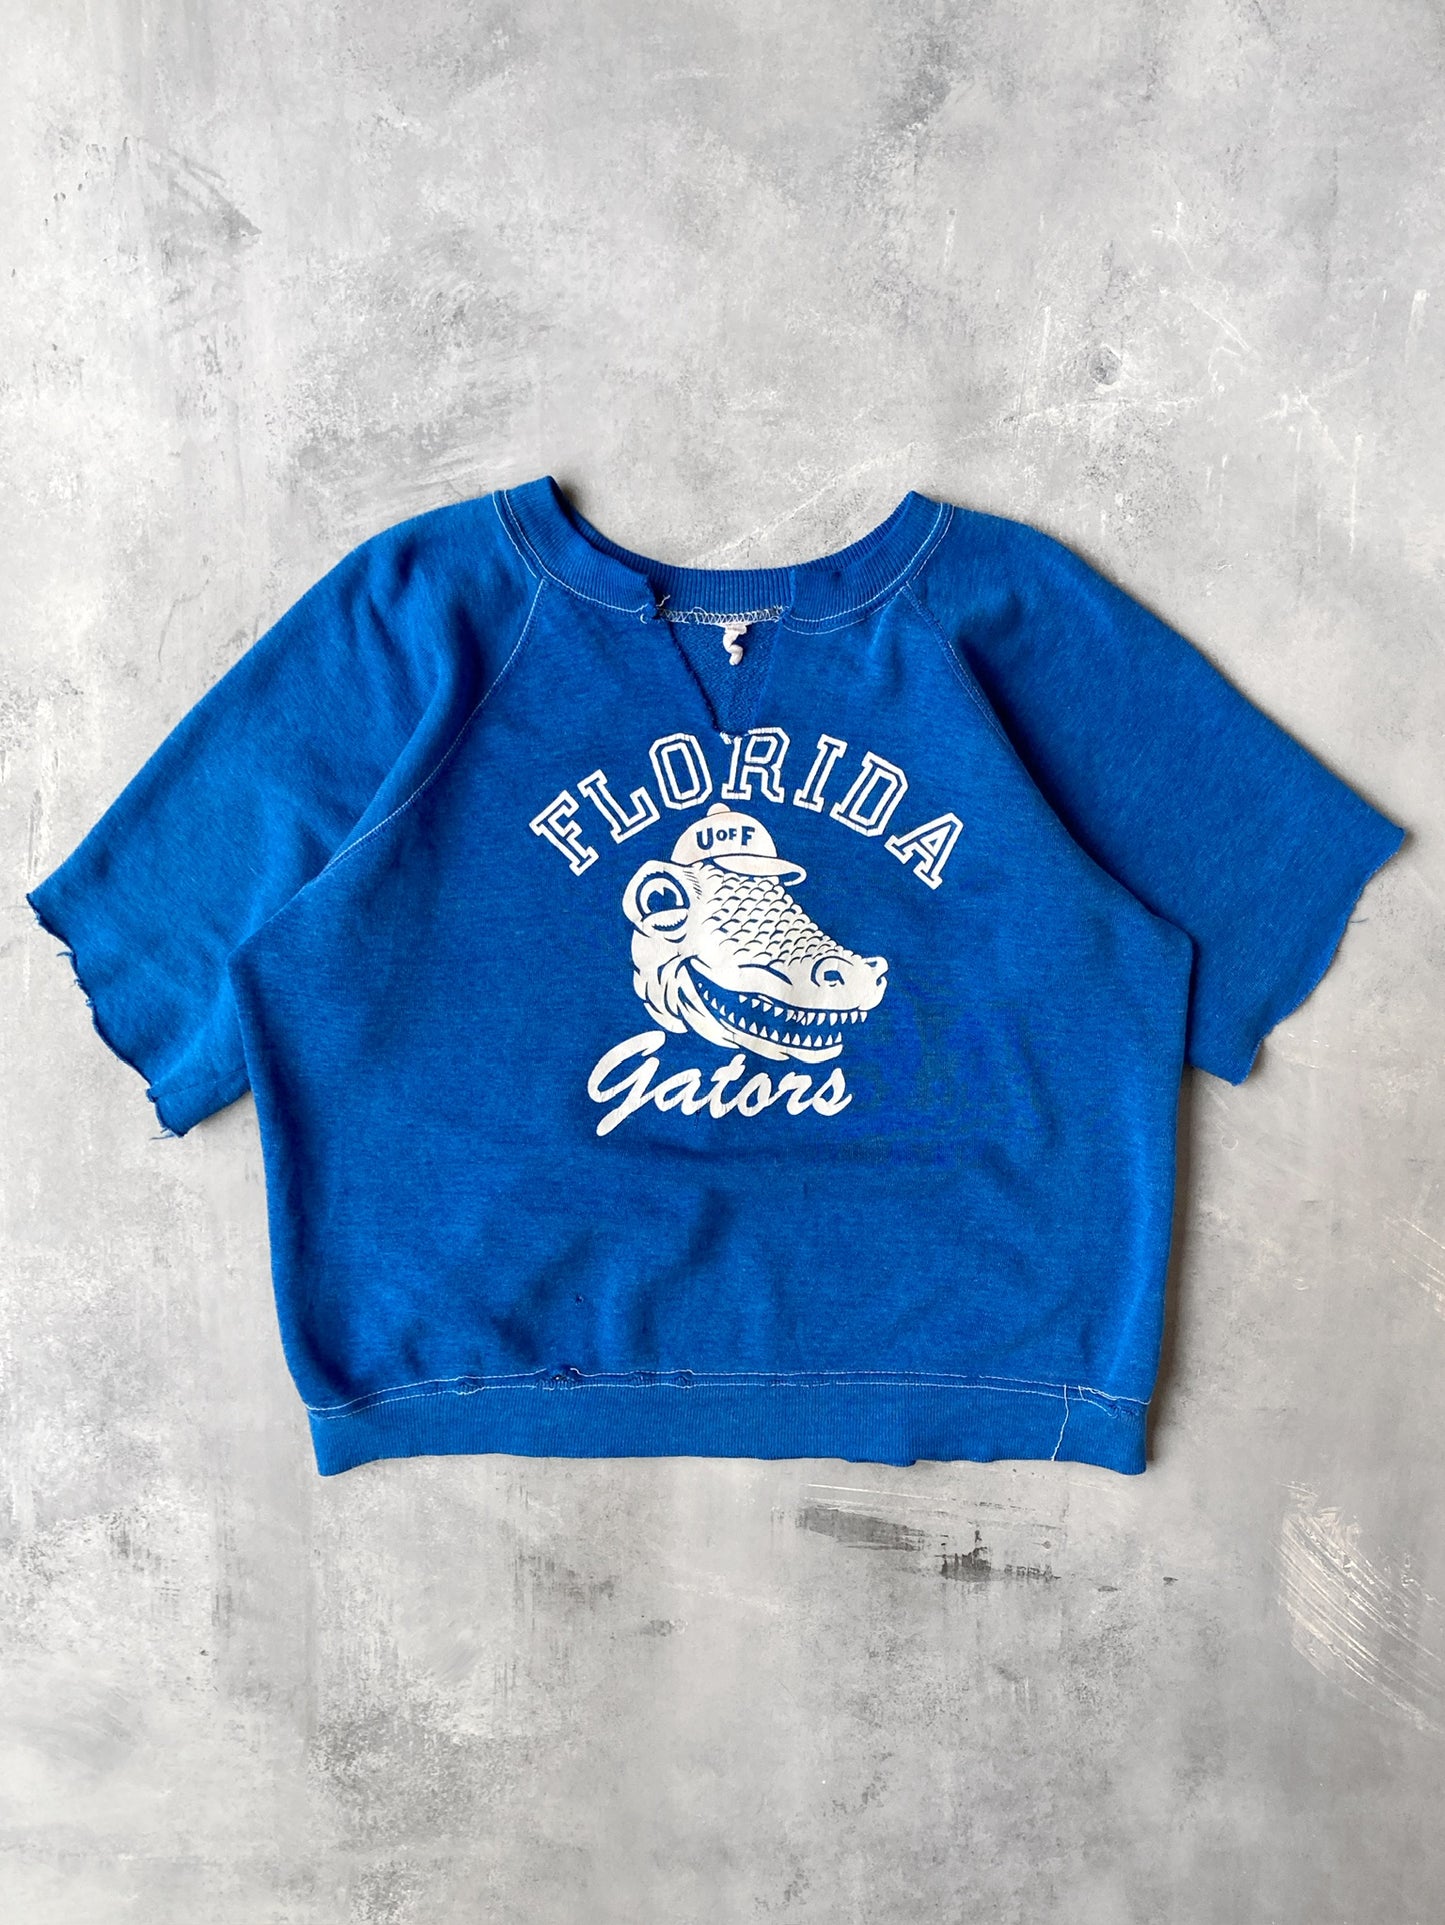 Florida Gators Distressed Pullover 70's - Large